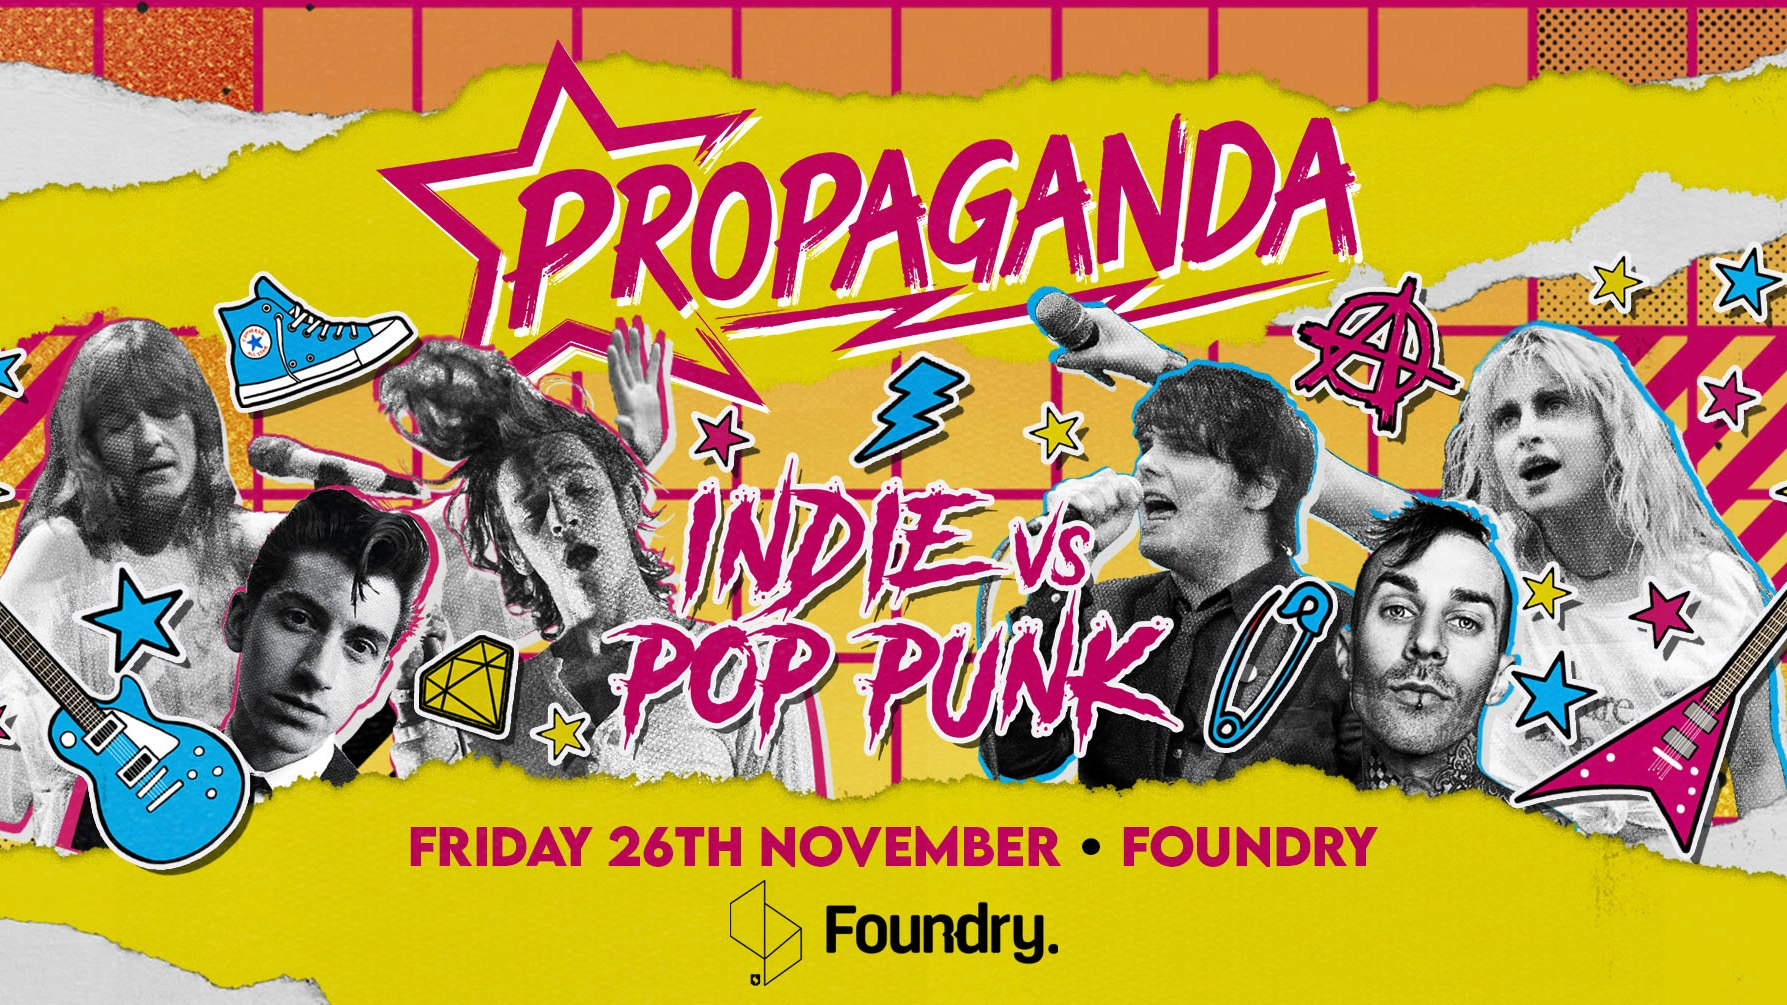 Propaganda Sheffield – Indie vs Pop-Punk!